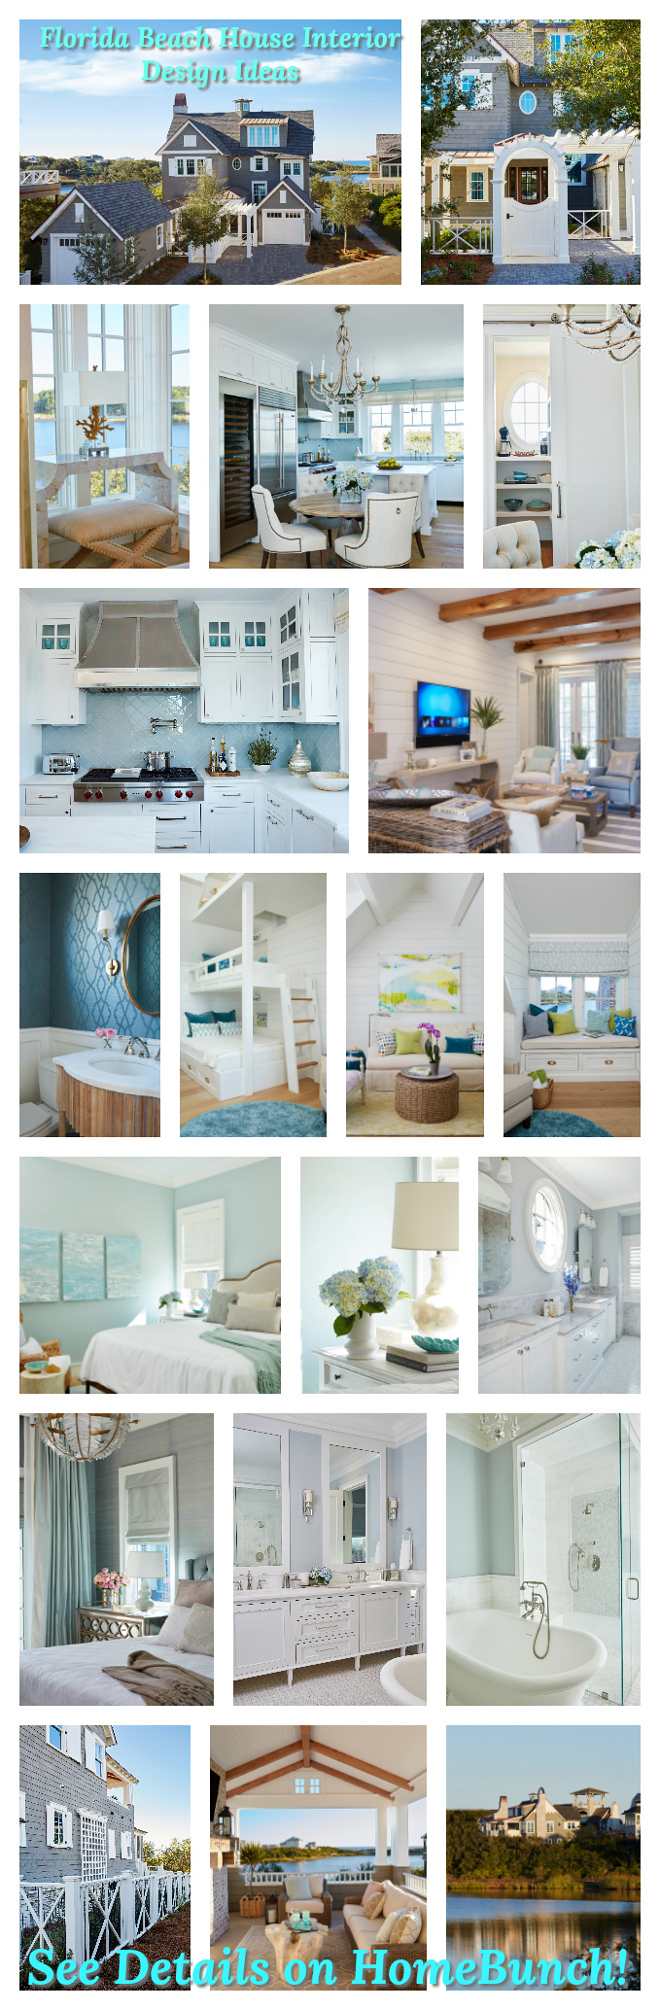 Florida Beach House Interior Design Ideas Paint colors and decor sources Florida Beach House Interior Design Ideas